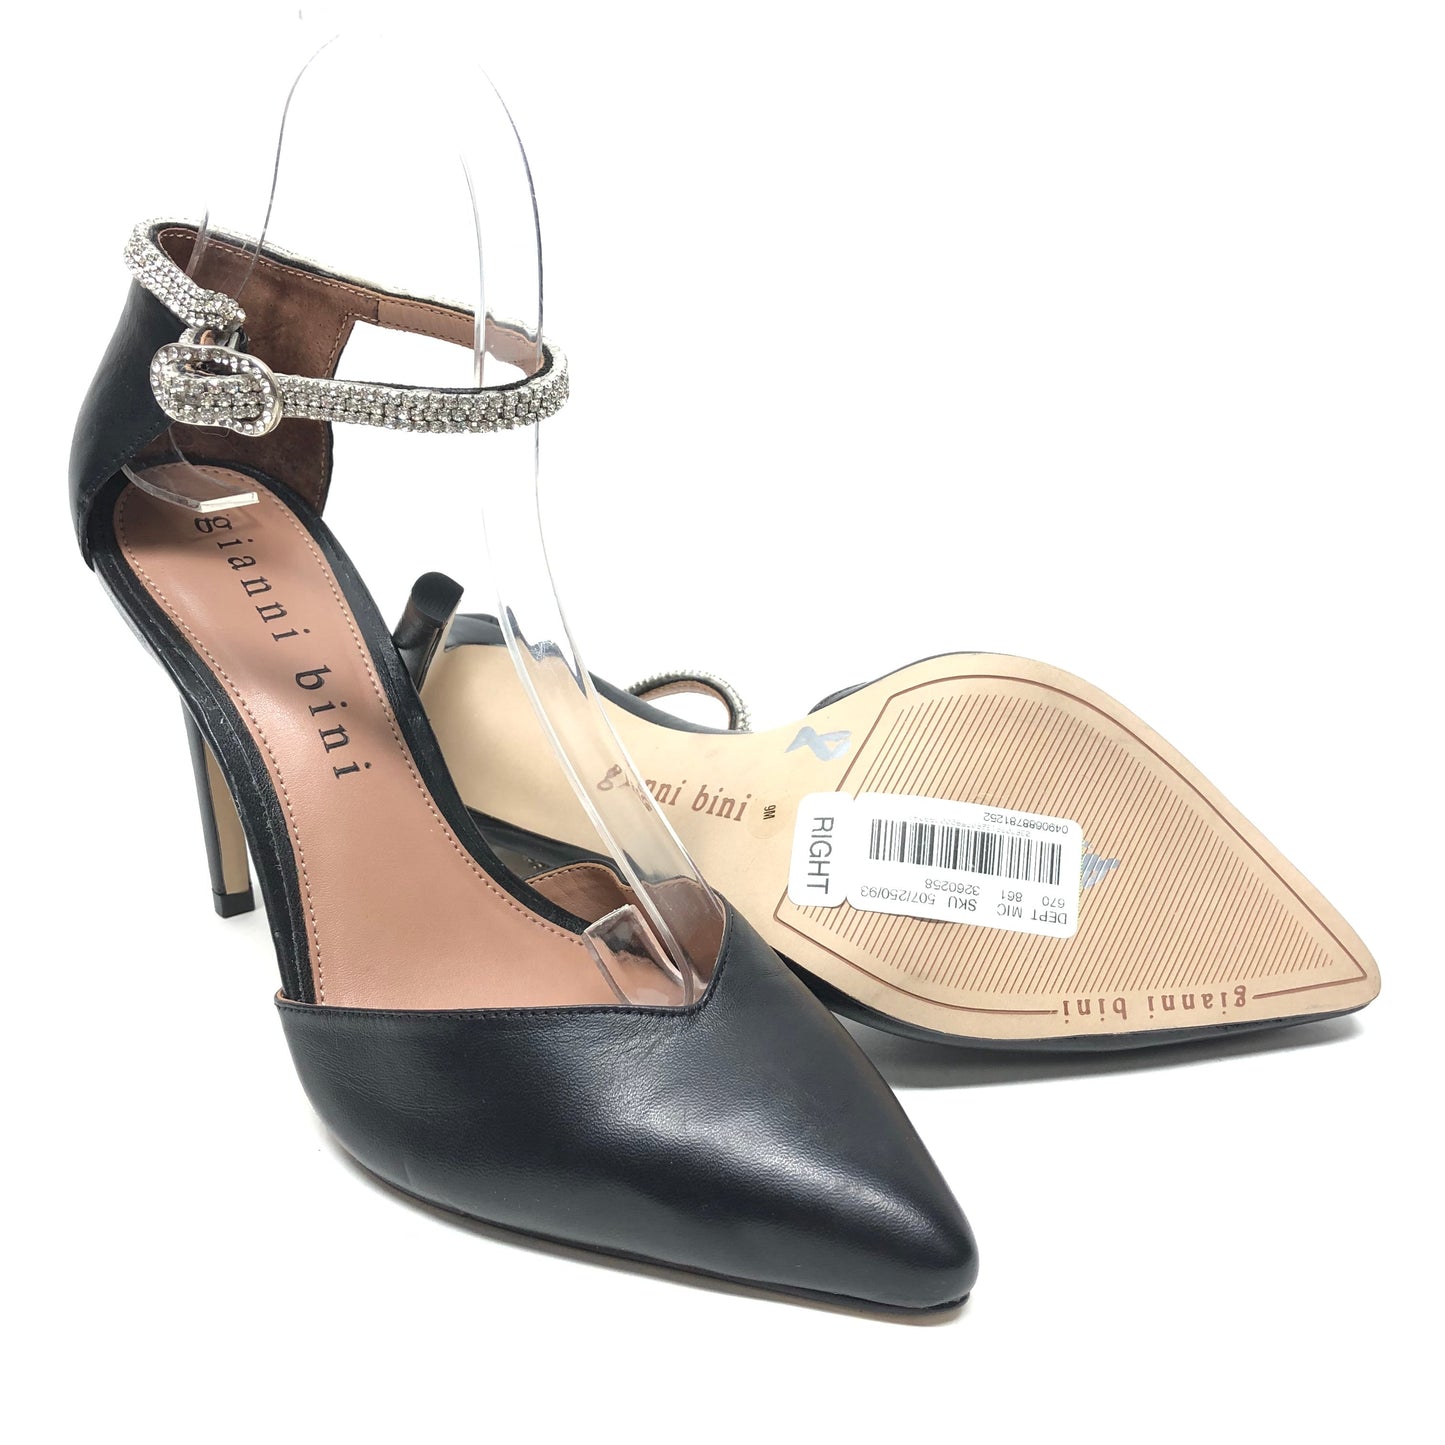 Shoes Heels Stiletto By Gianni Bini  Size: 9